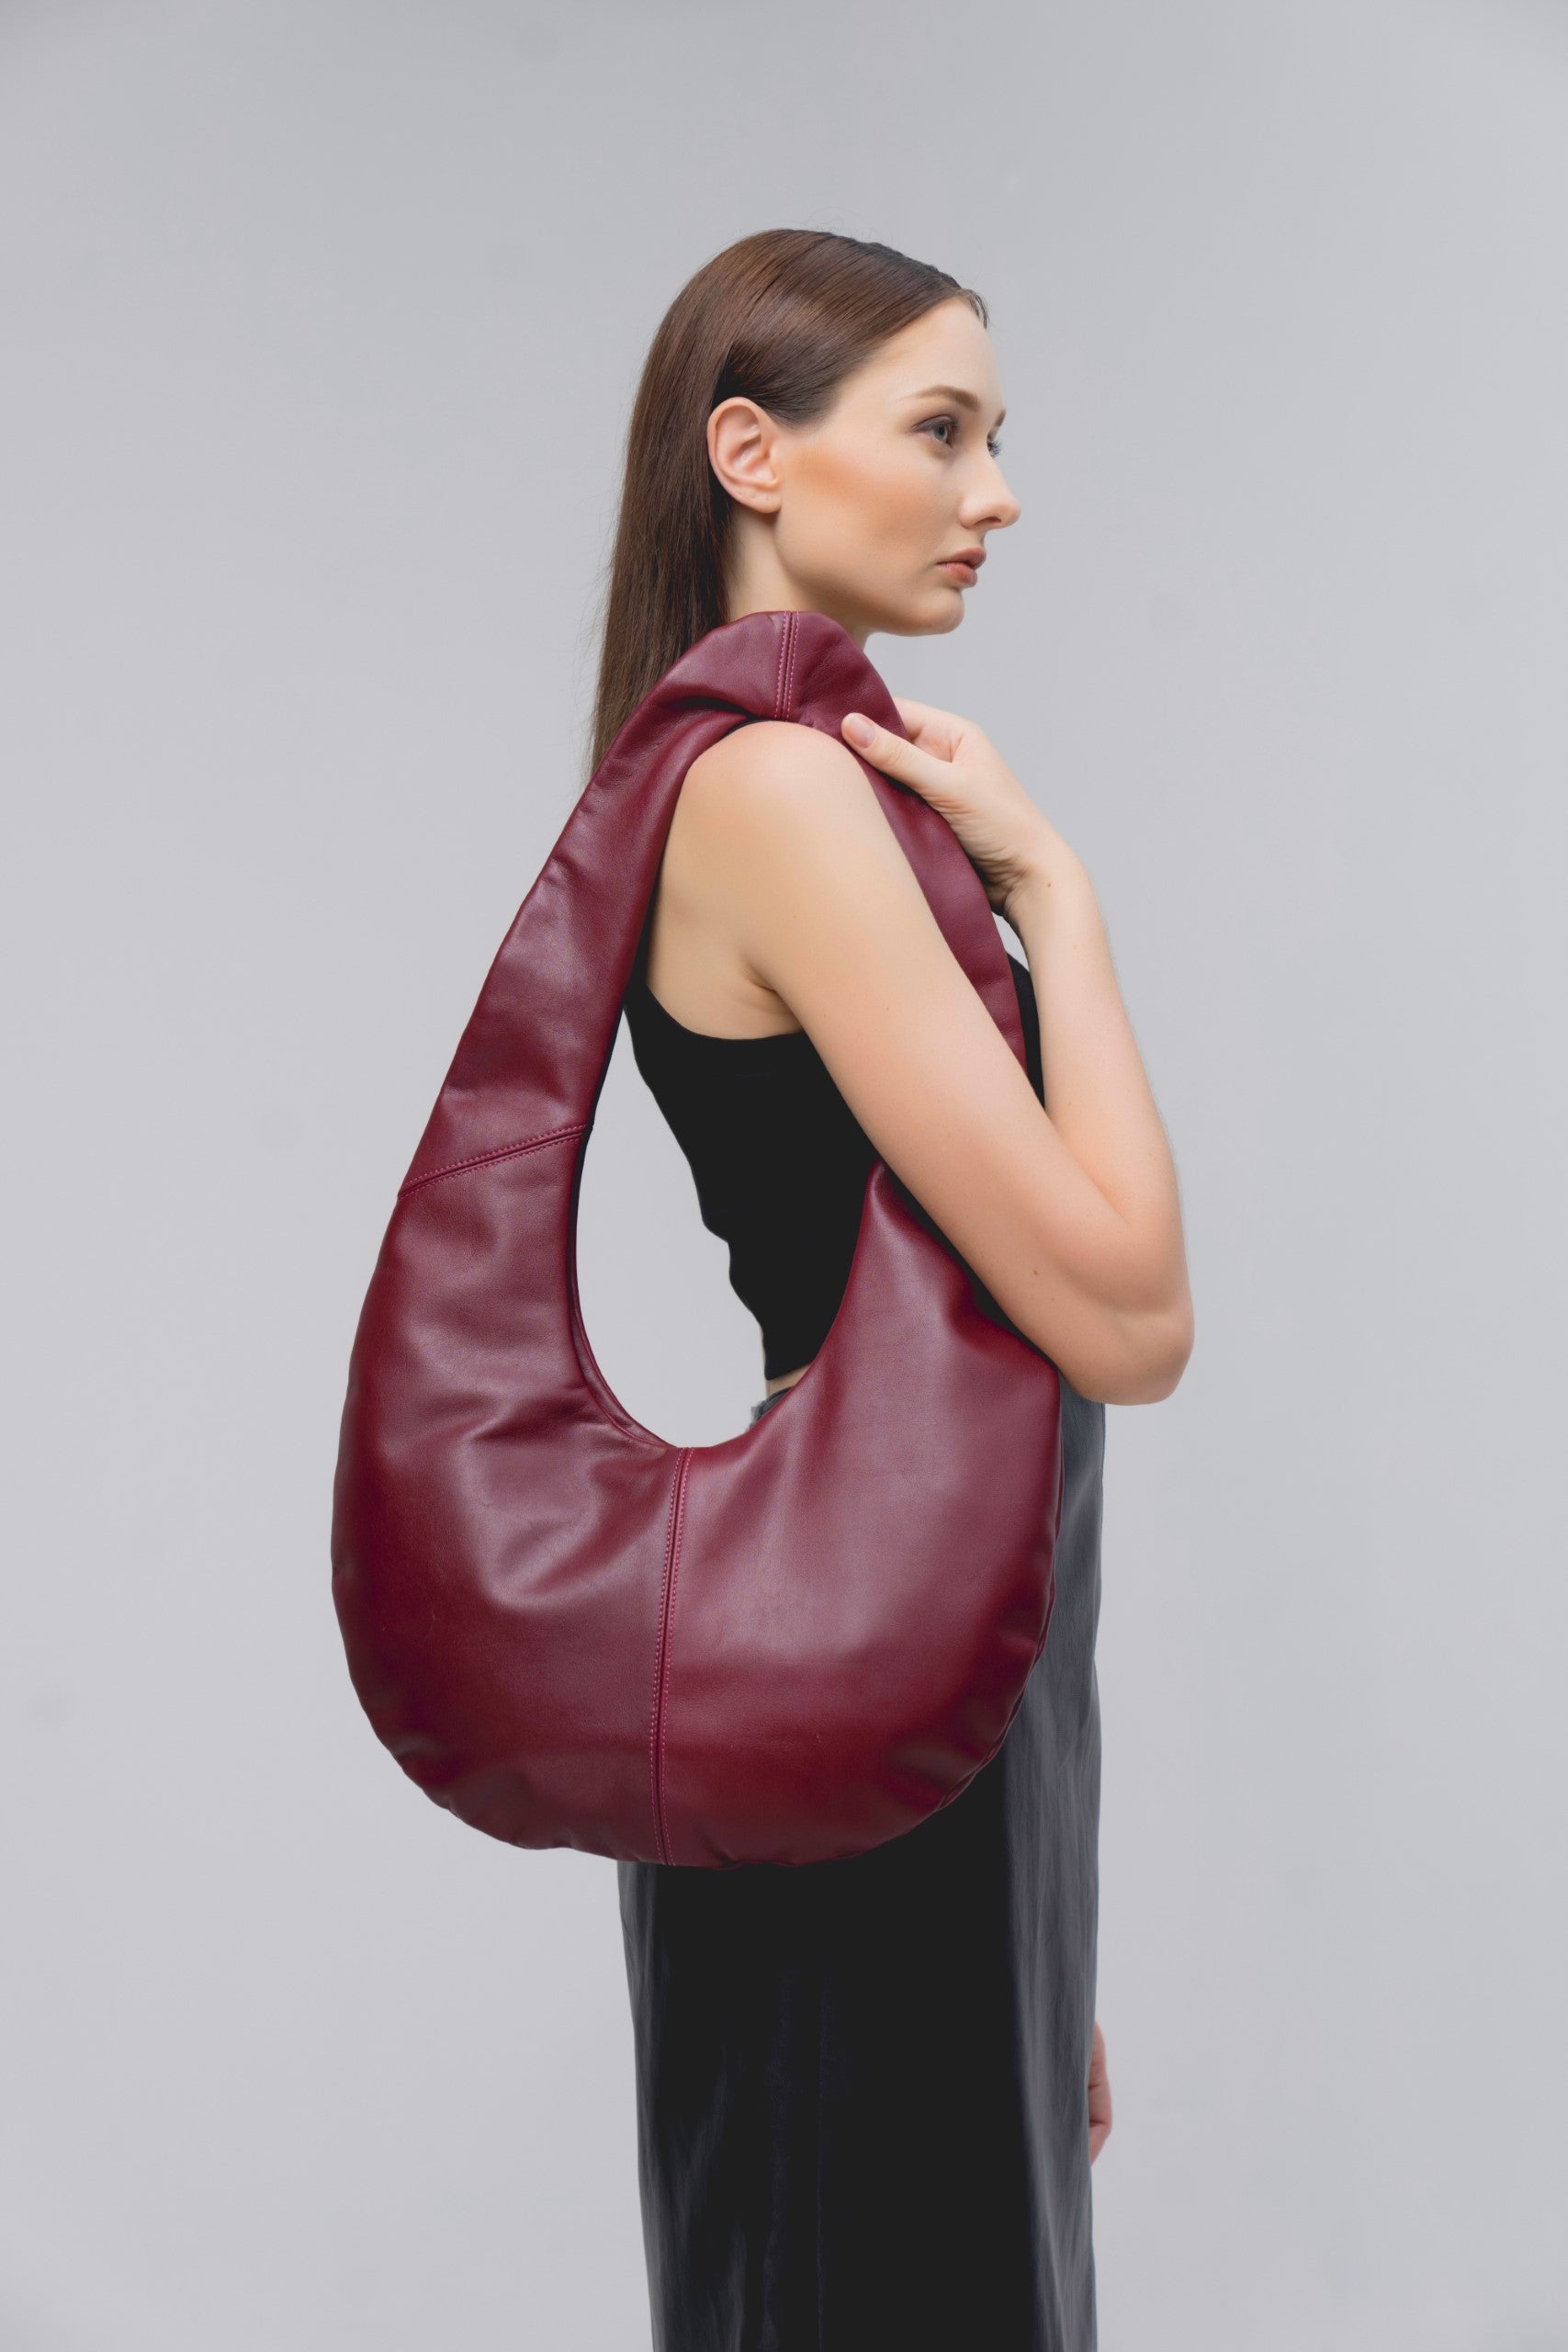 Red RAINDROP handbag (real leather)